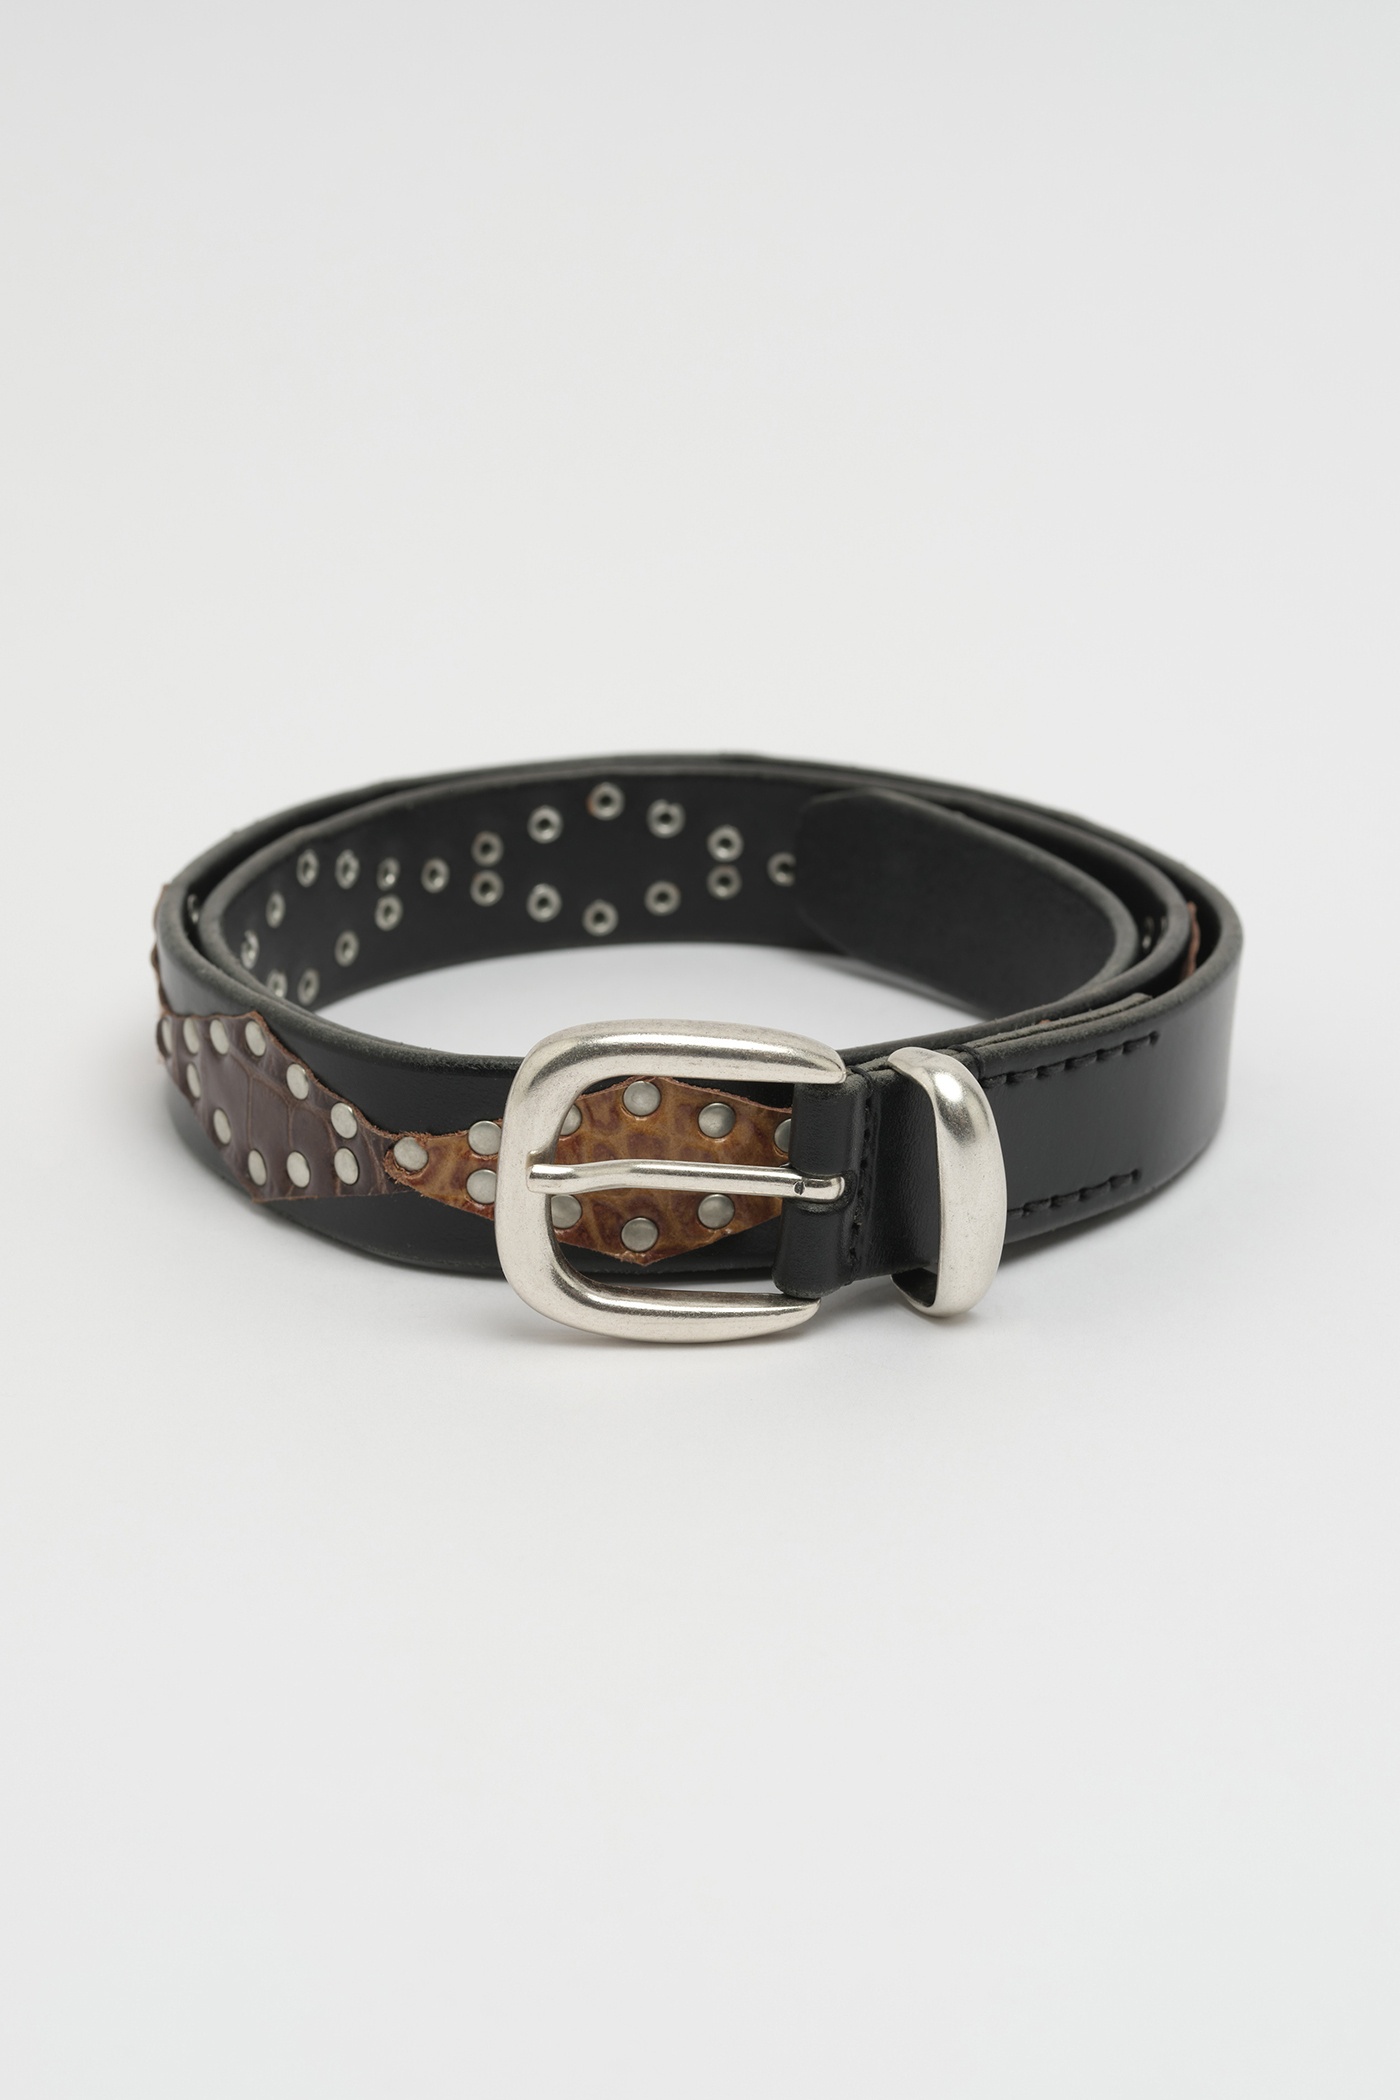 3 CM Patched Belt Black Bridle Leather - 1